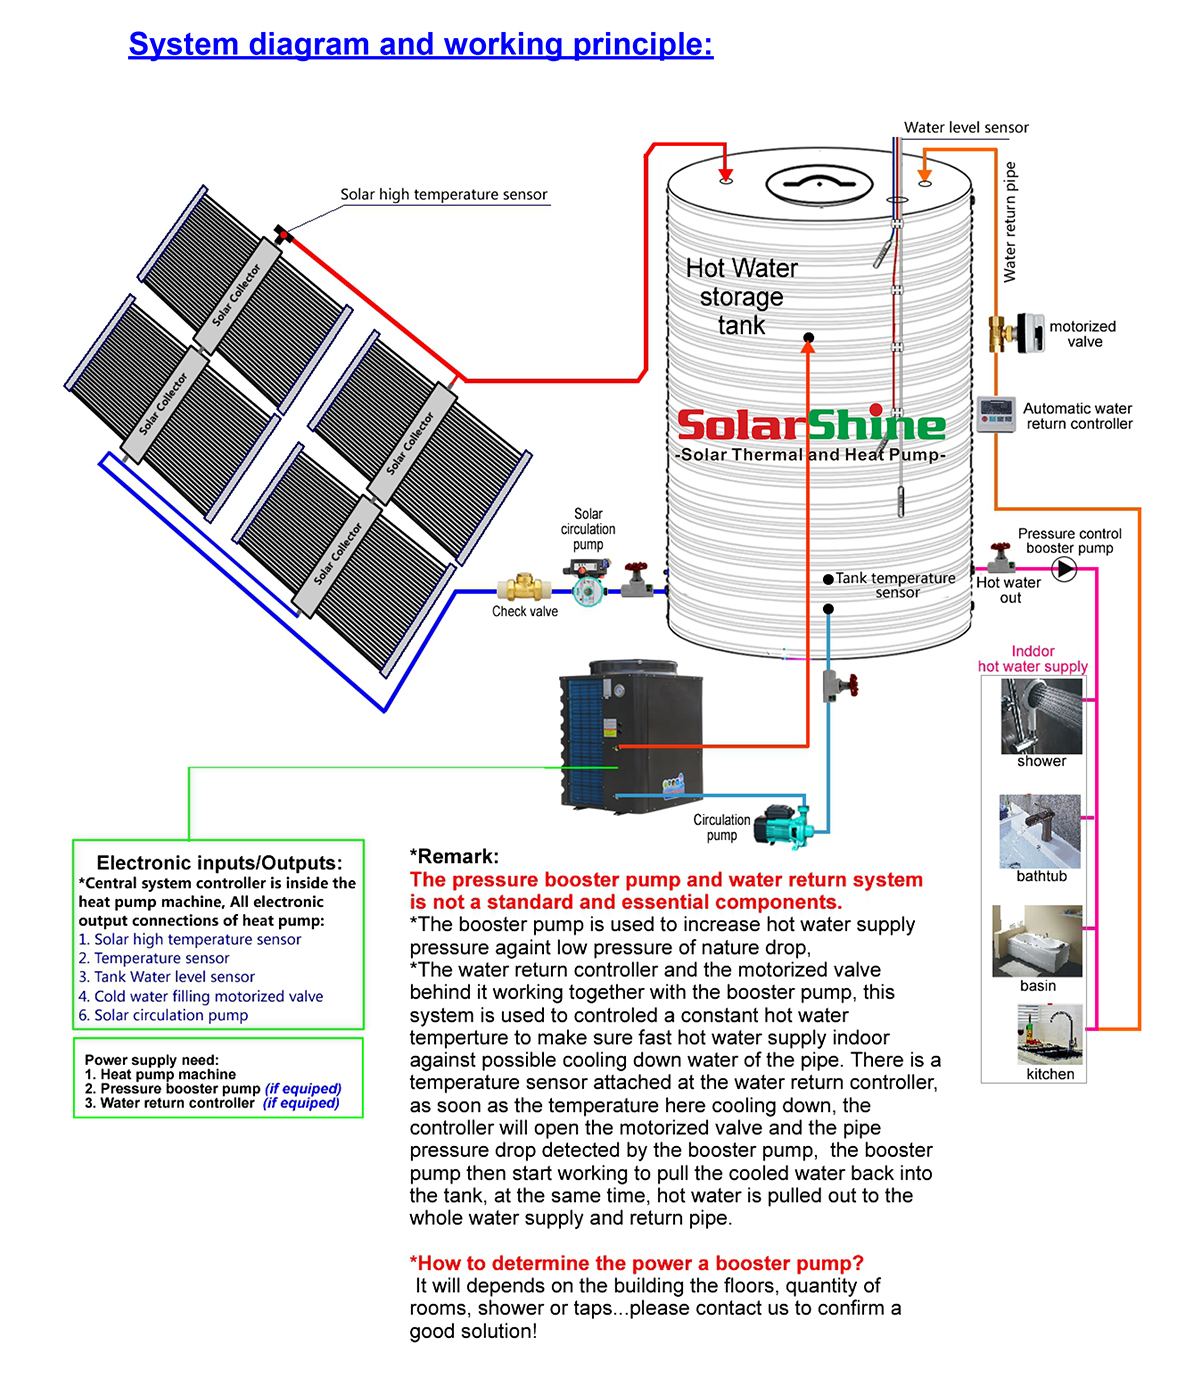 working principle of solar hybrid heat pump system